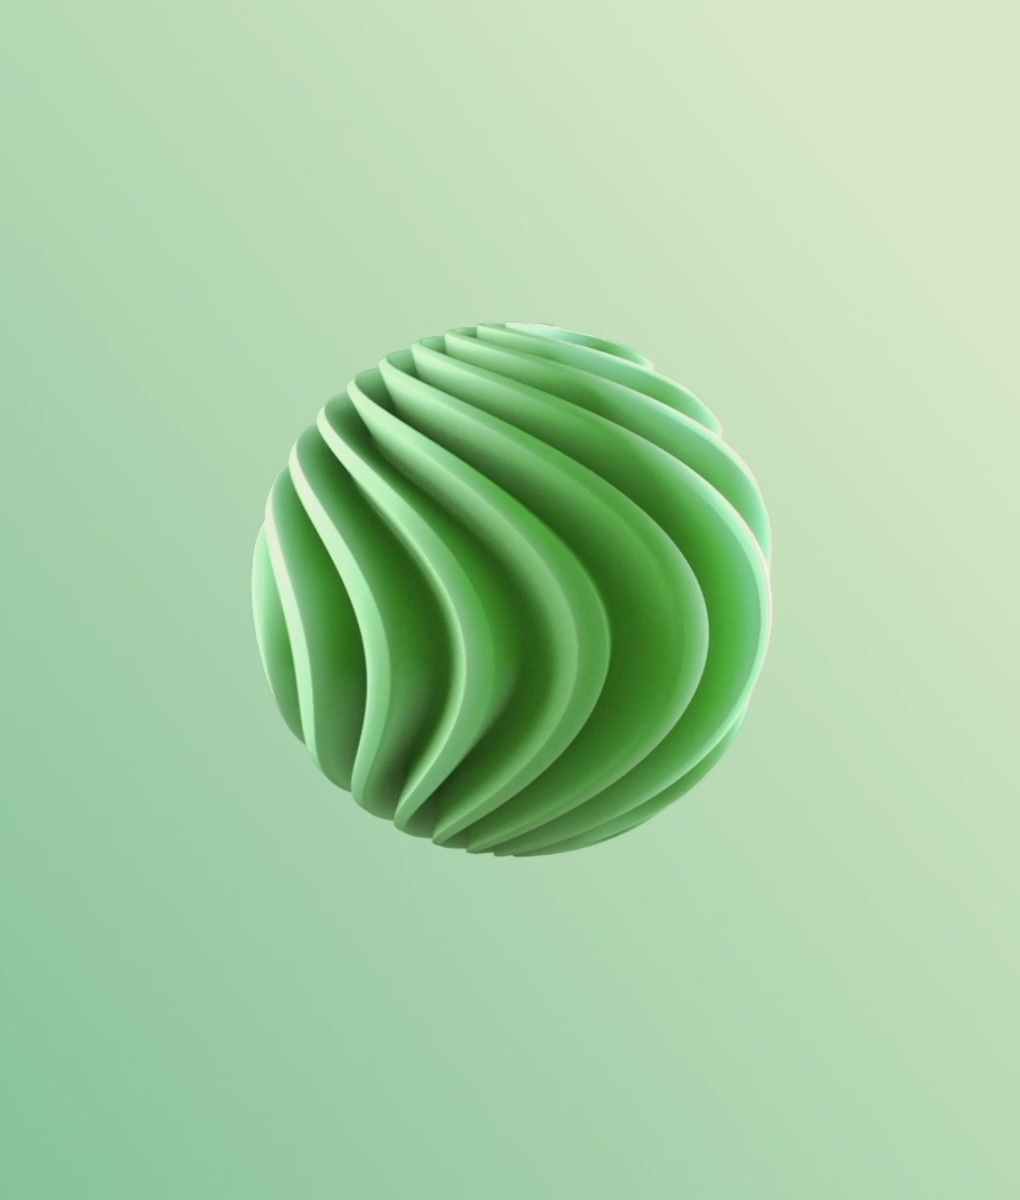 3D Sphere Animation